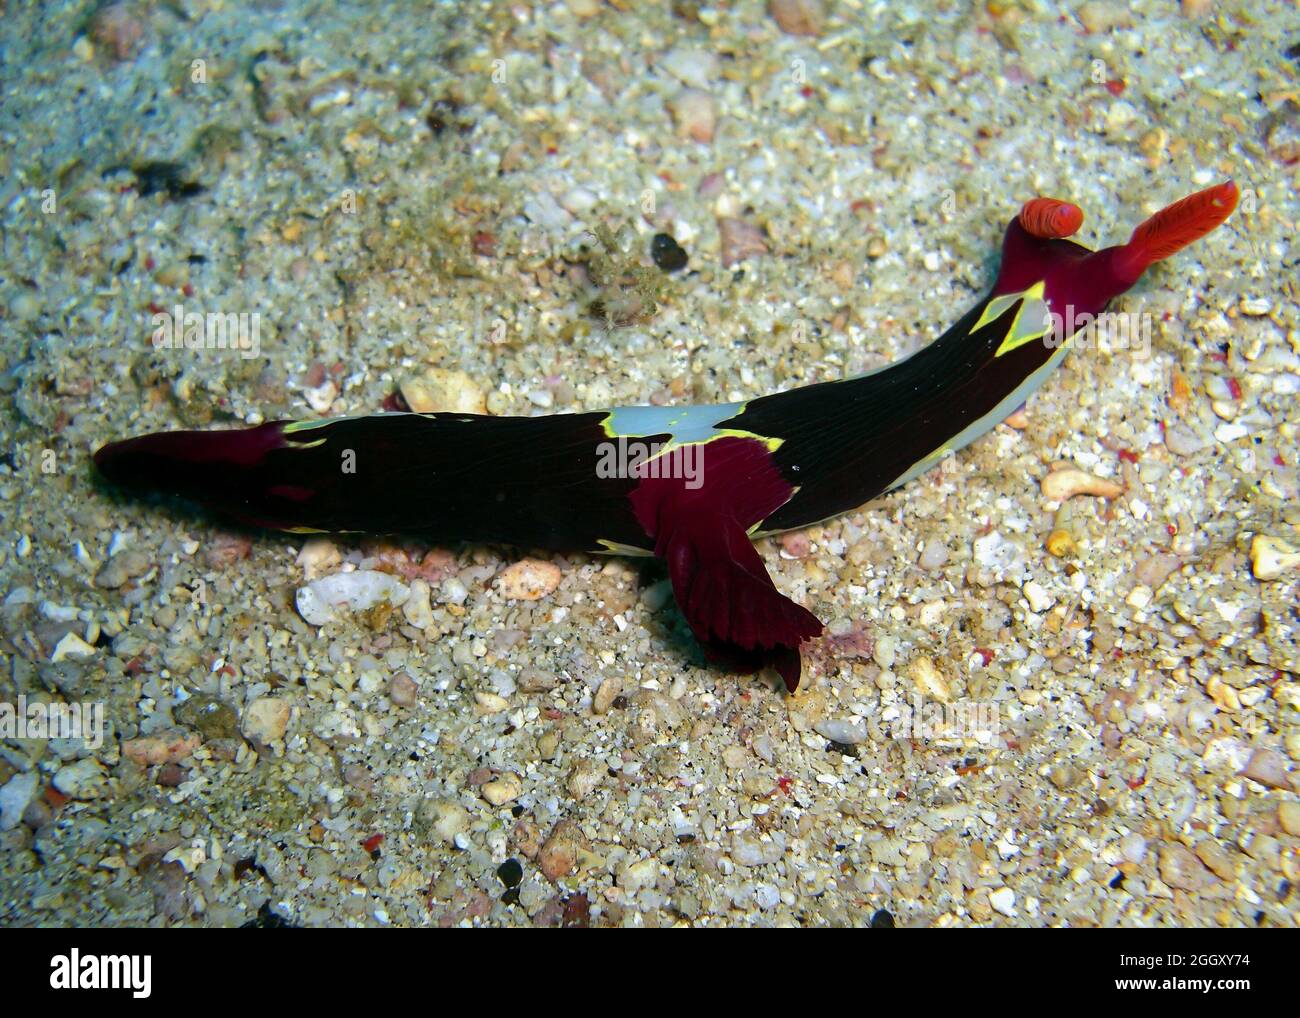 Nudibranch or Seaslug (Nembrotha Purpureo Lineata) on the ground in the filipino sea 15.2.2012 Stock Photo